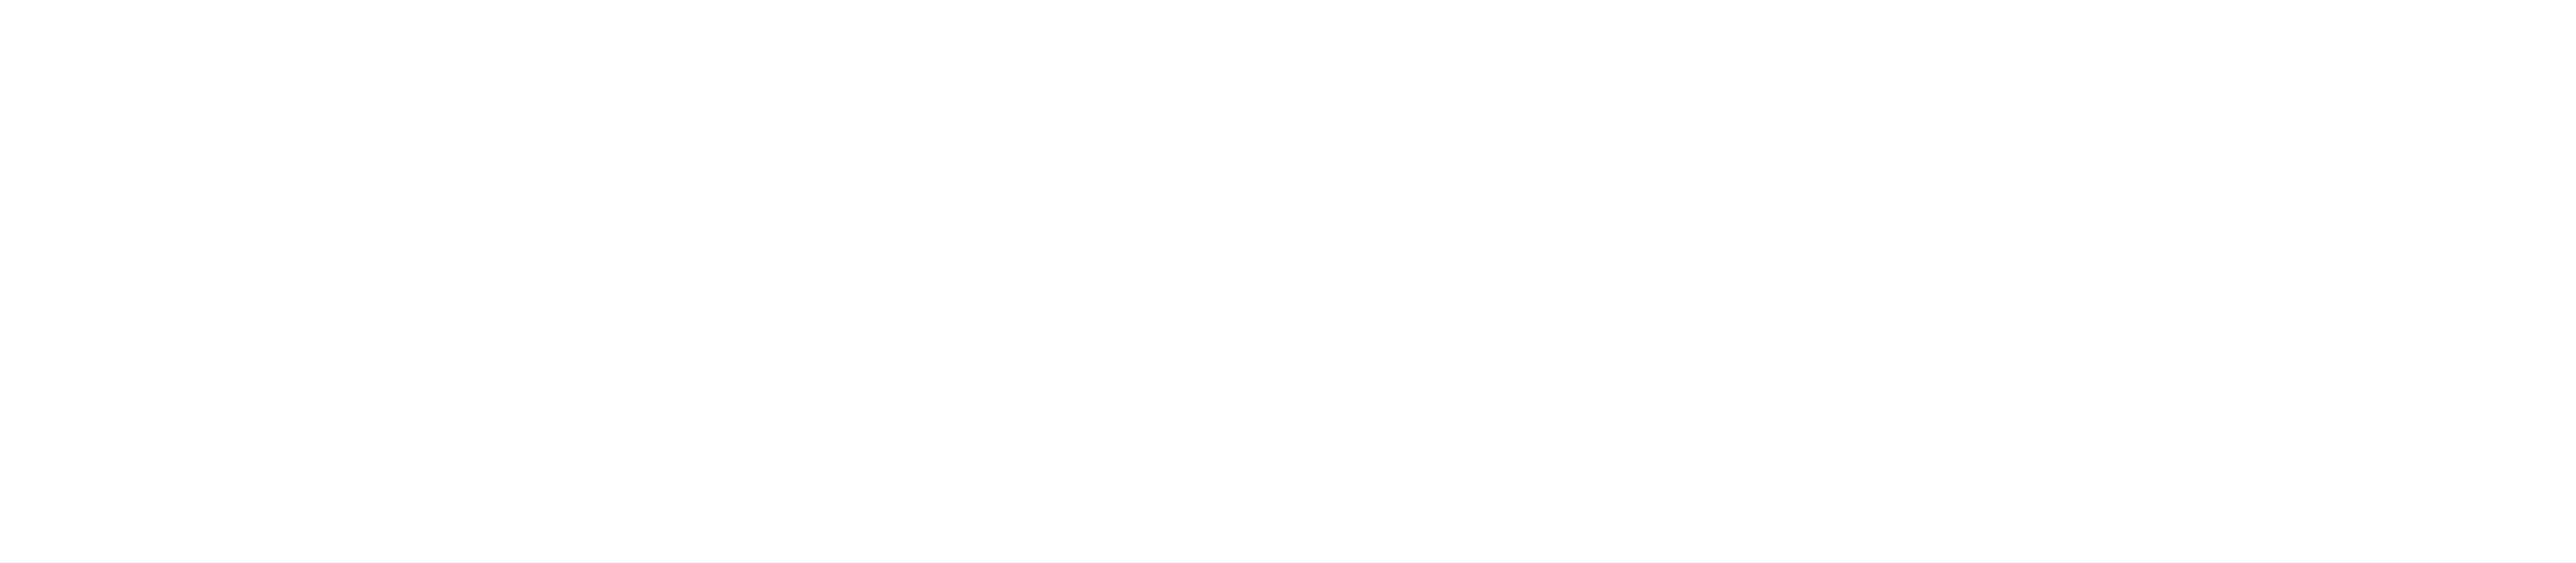 masktime logo white transparent